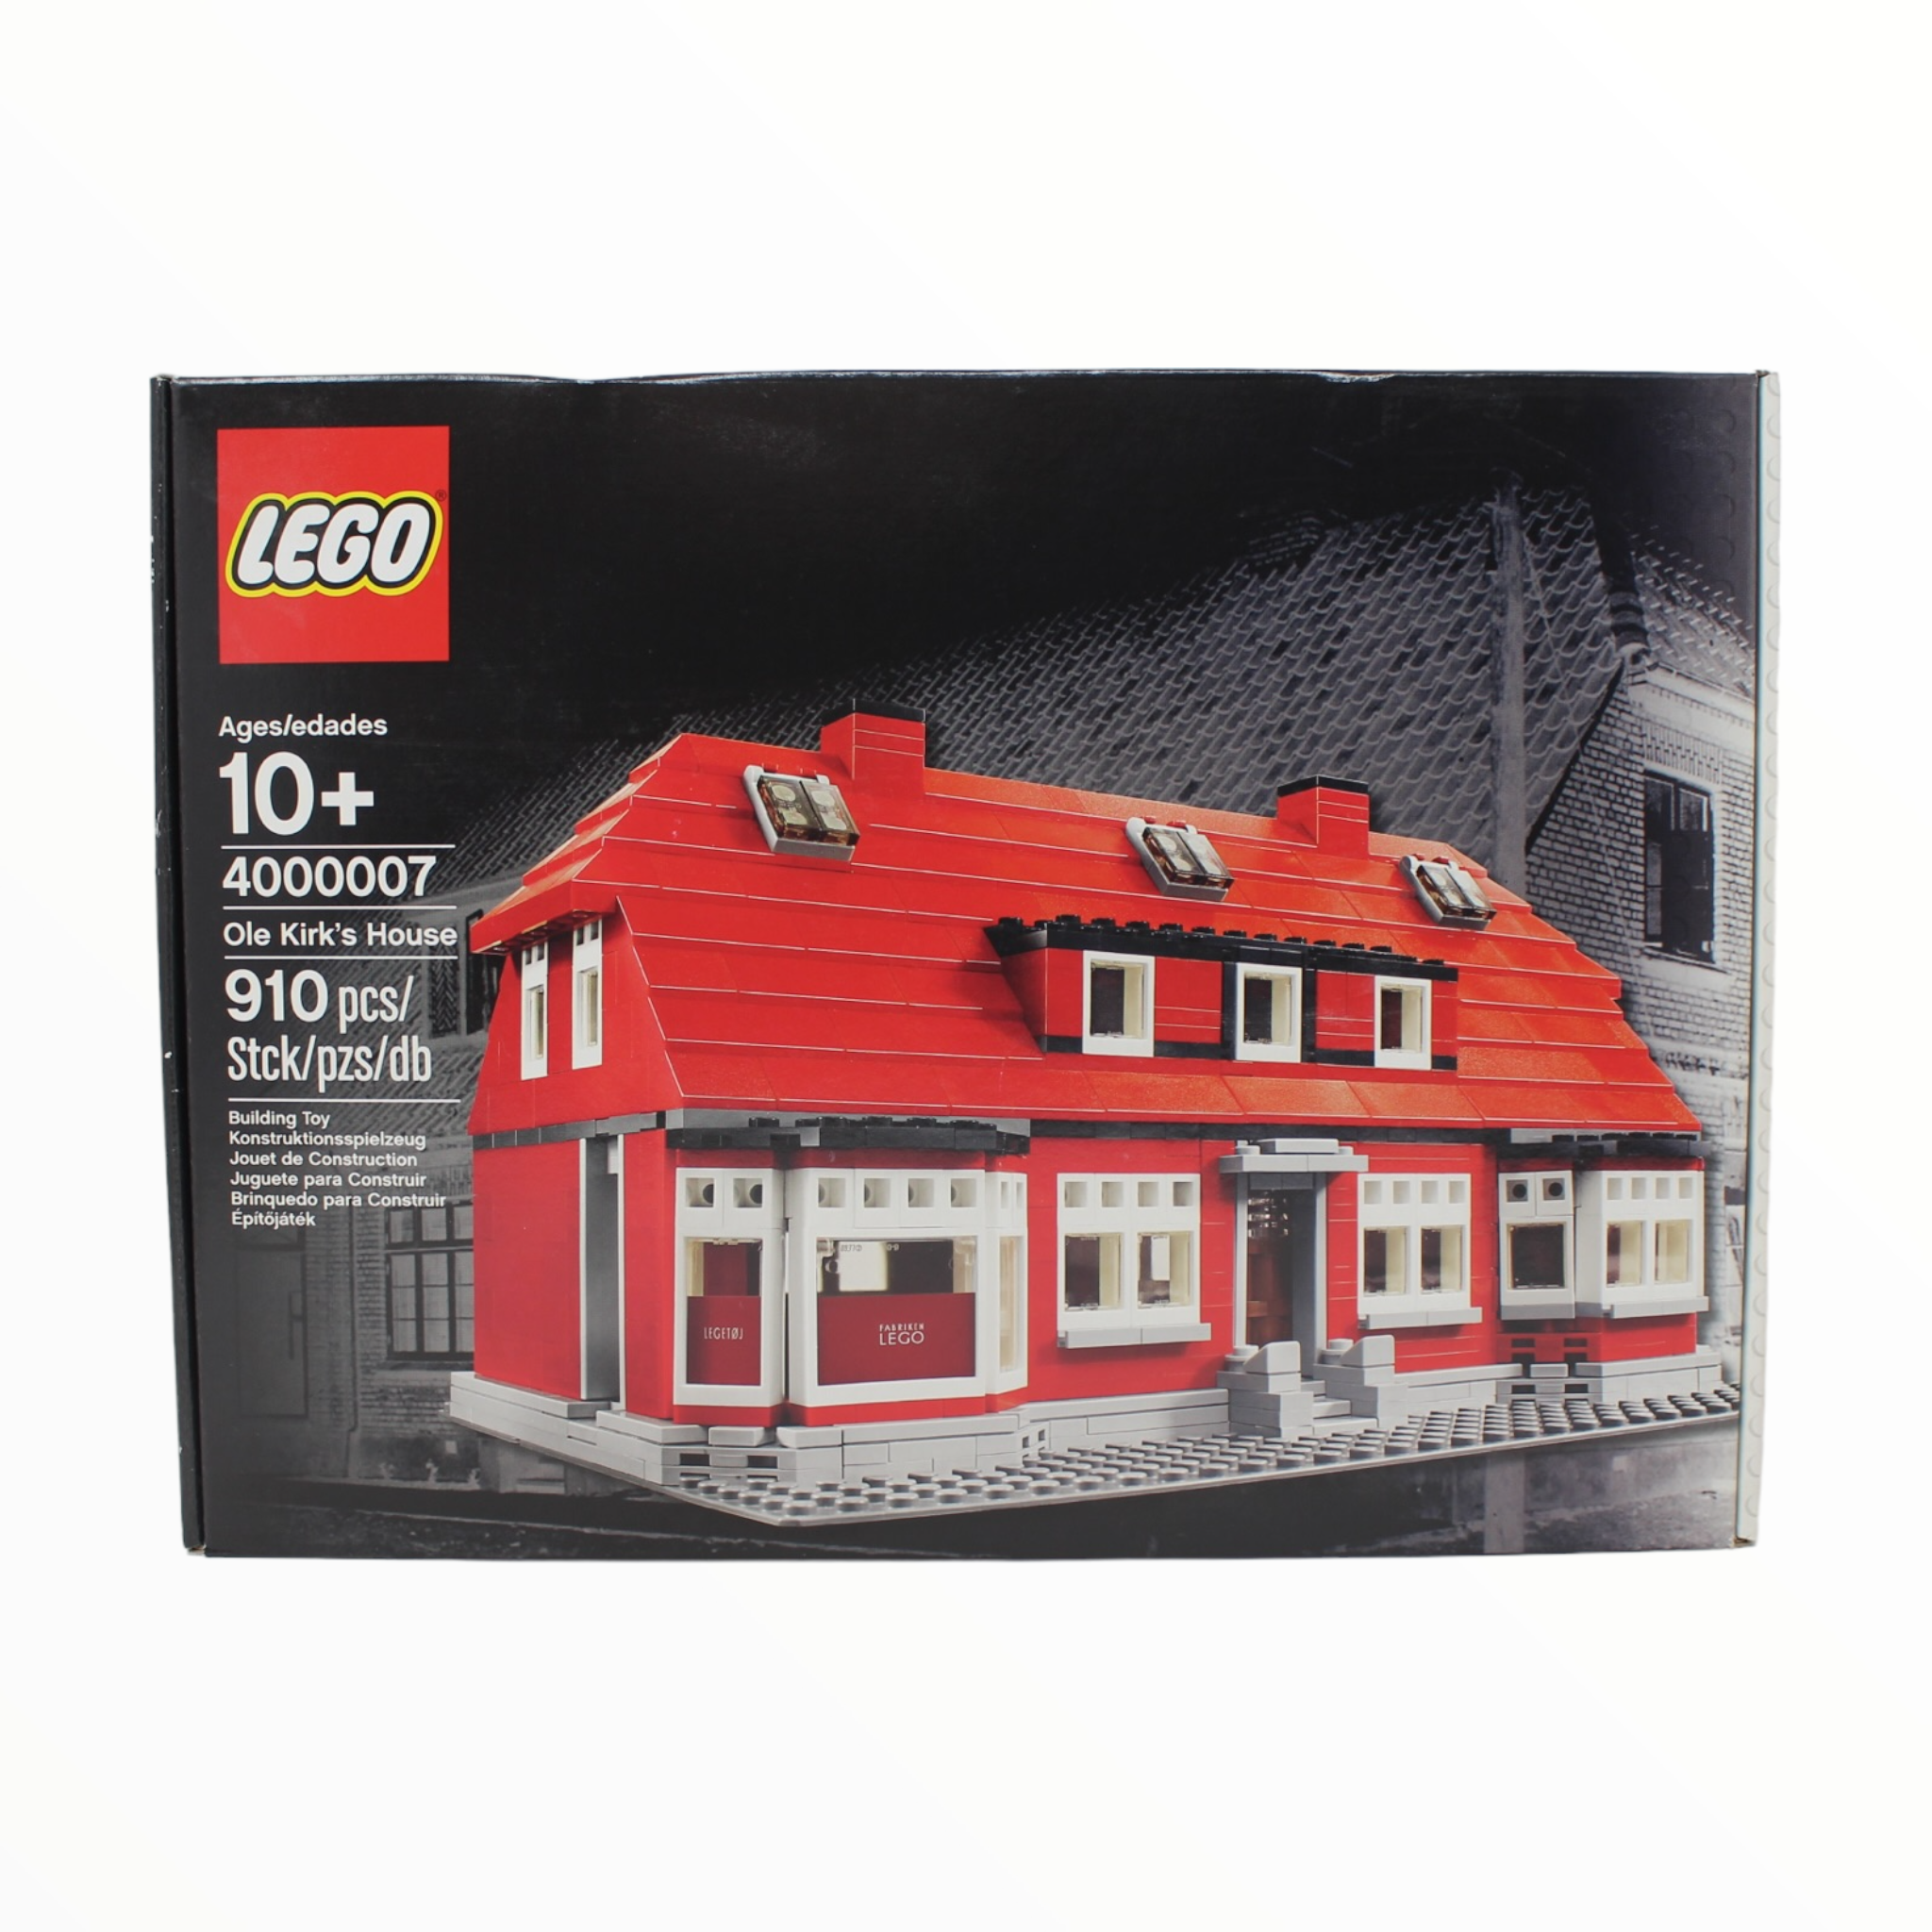 Retired Set 4000007 LEGO Ole Kirk's House (2012)